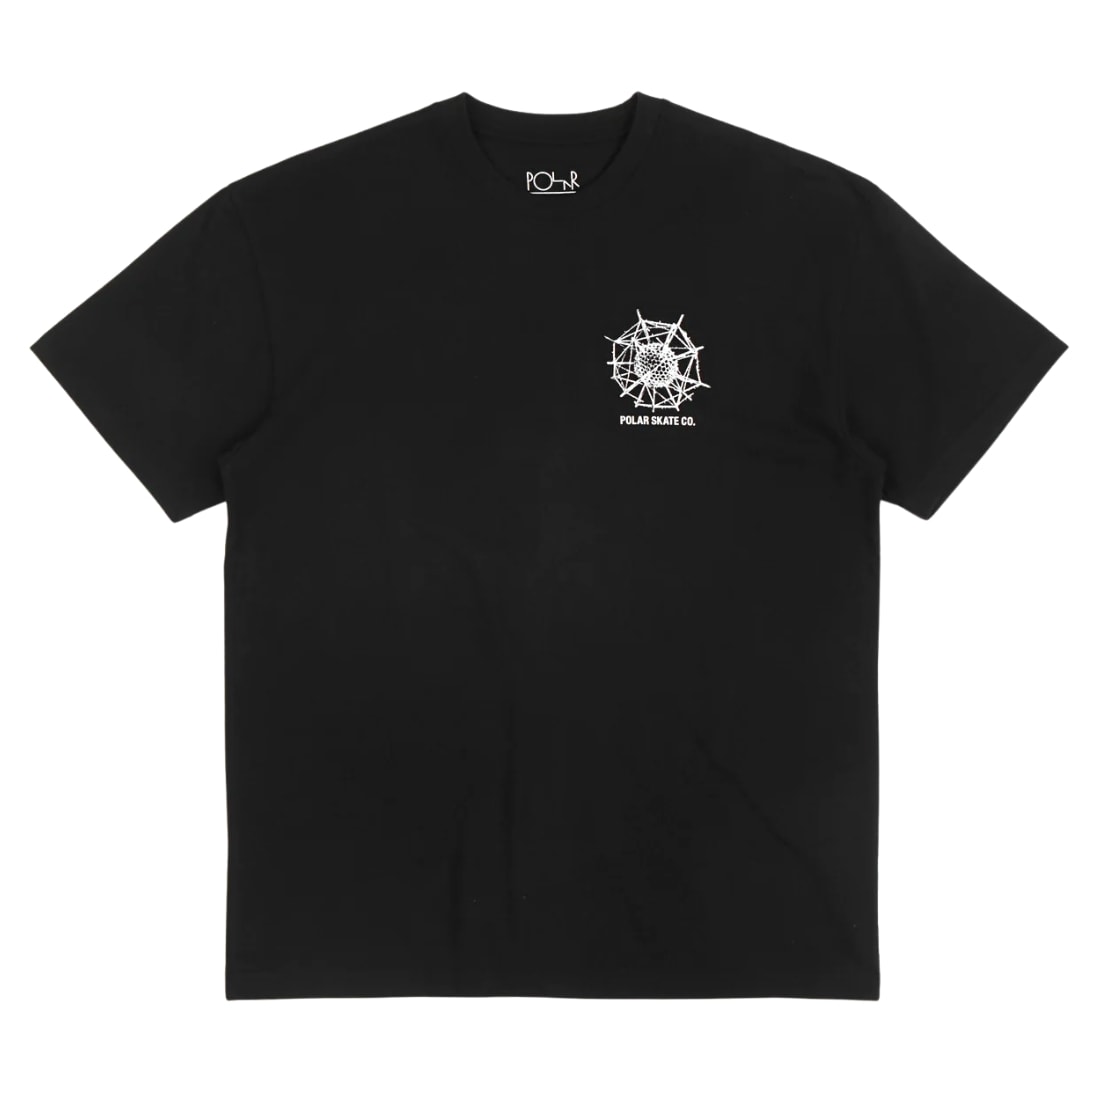 Polar Structural Order T-Shirt - Black - Mens Skate Brand T-Shirt by Polar